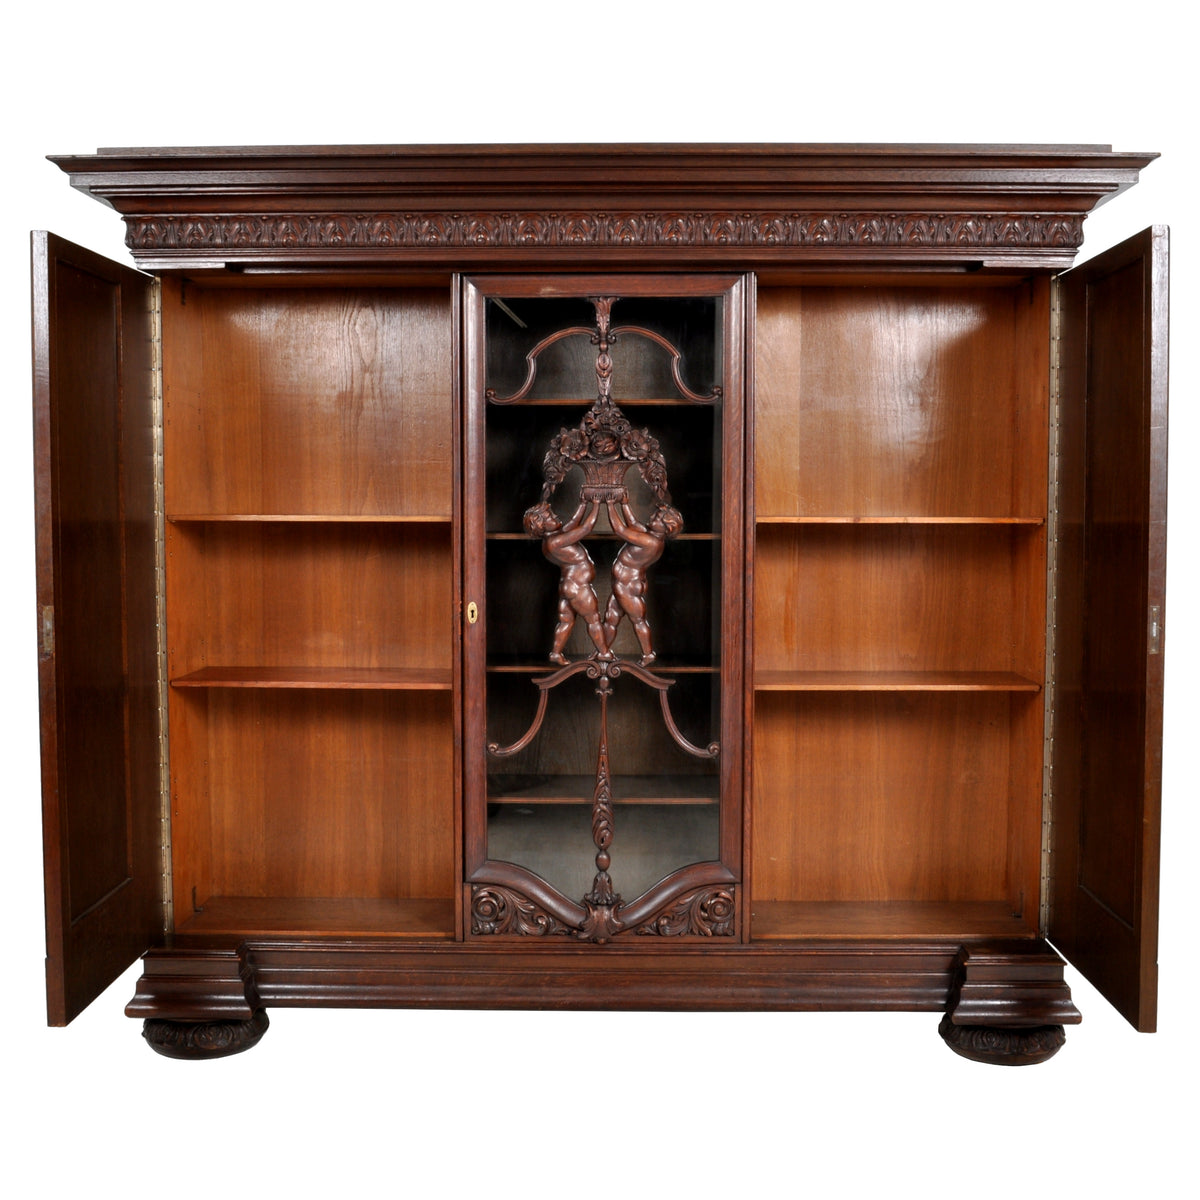 Antique German Baroque Revival Carved Oak Bookcase / Bibliotheque / Library Cabinet, circa 1890